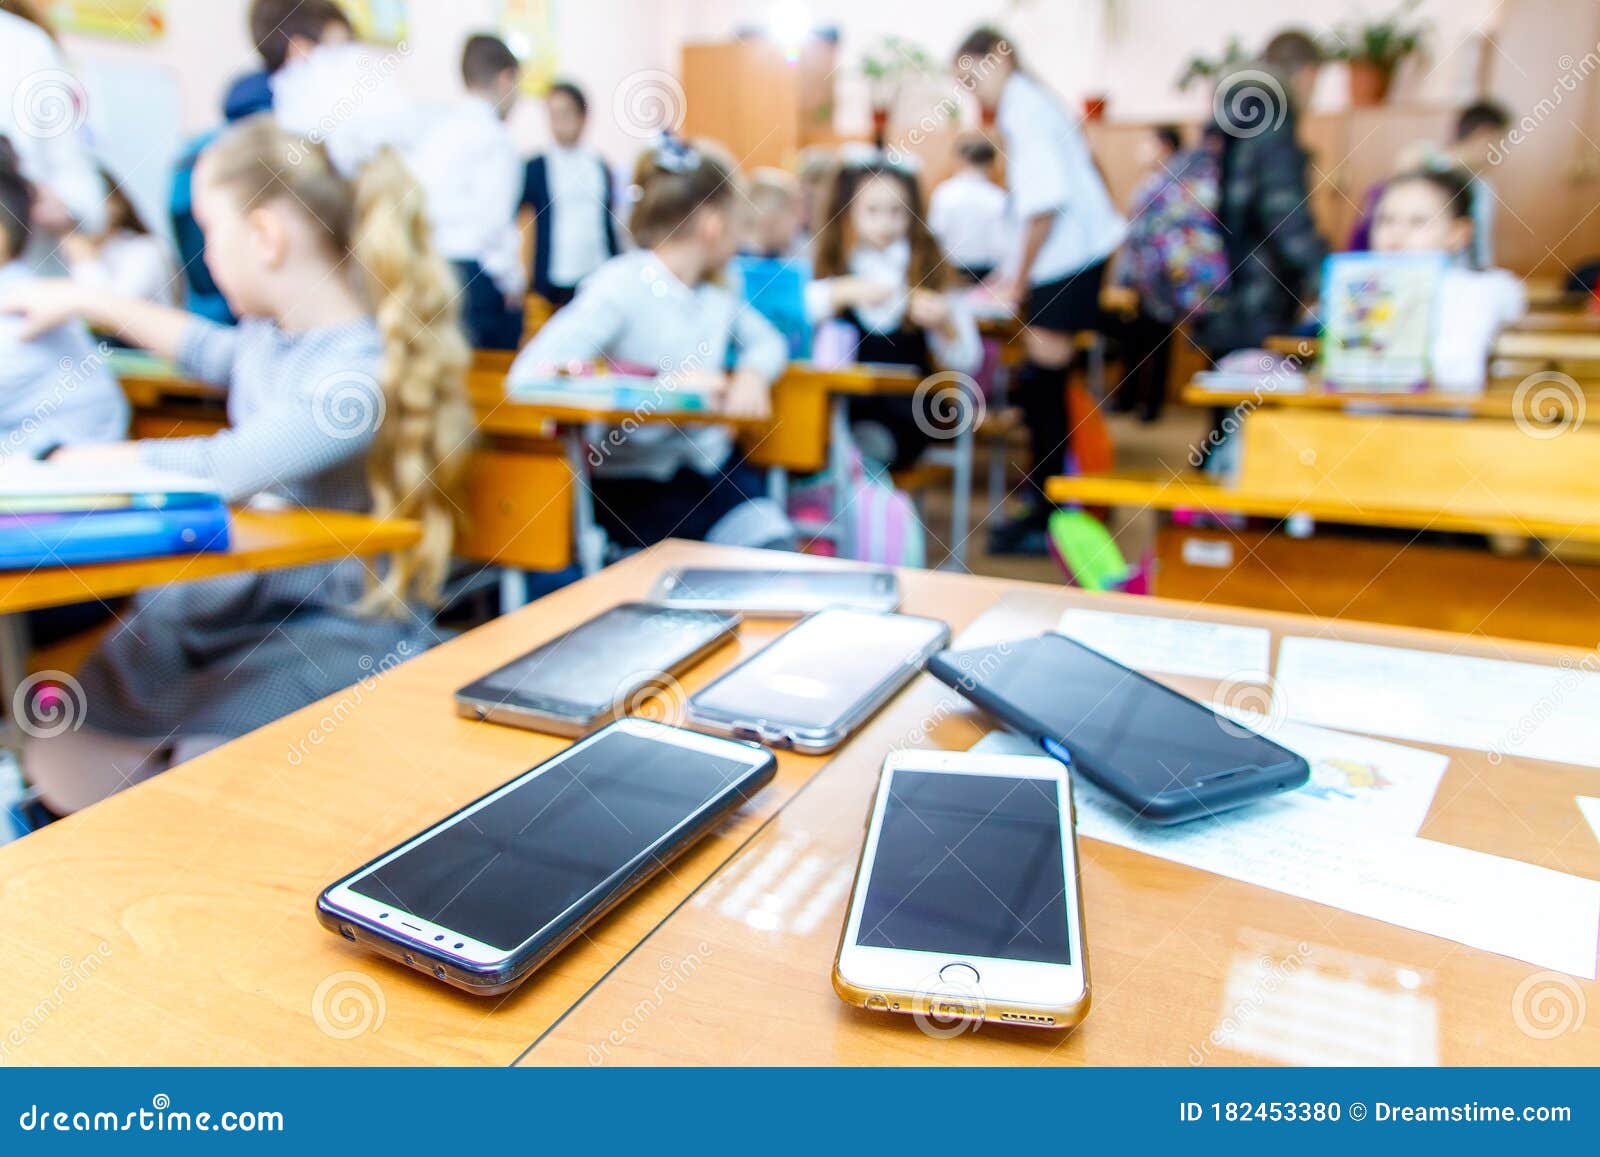 children mobile phones stand on a teacher`s desk in a school class